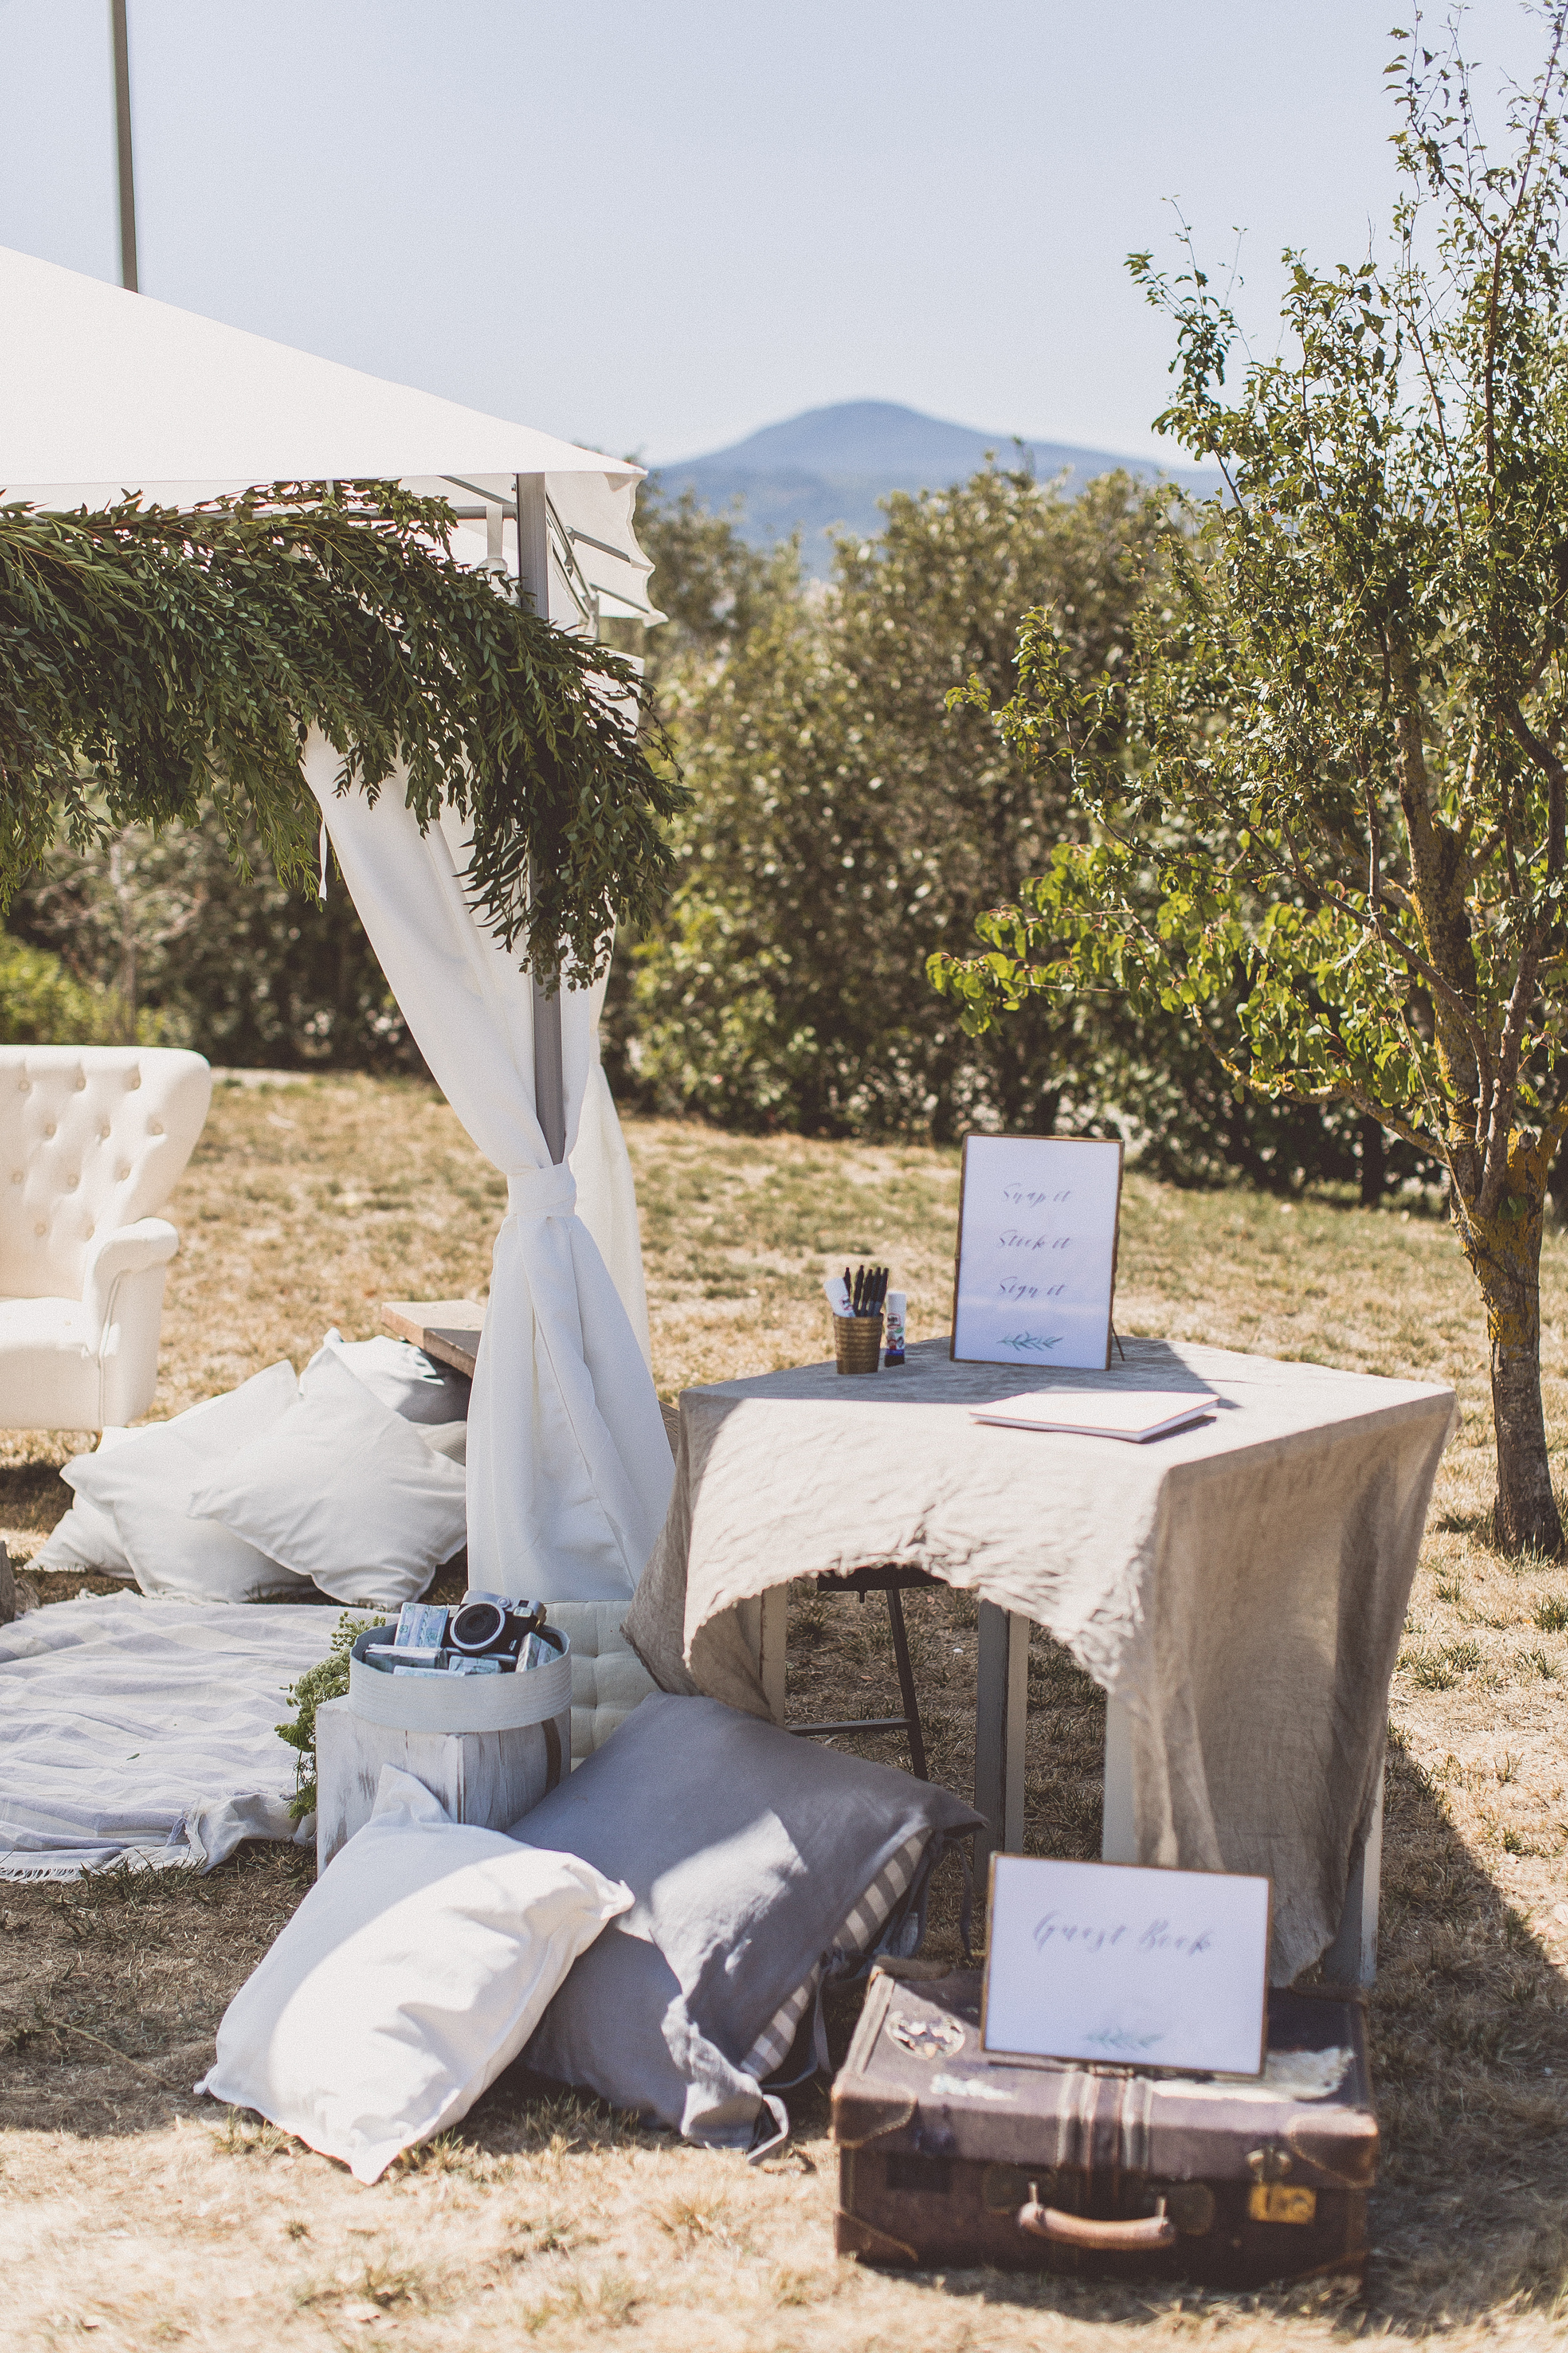 Polaroid camera guest book area outdoor wedding